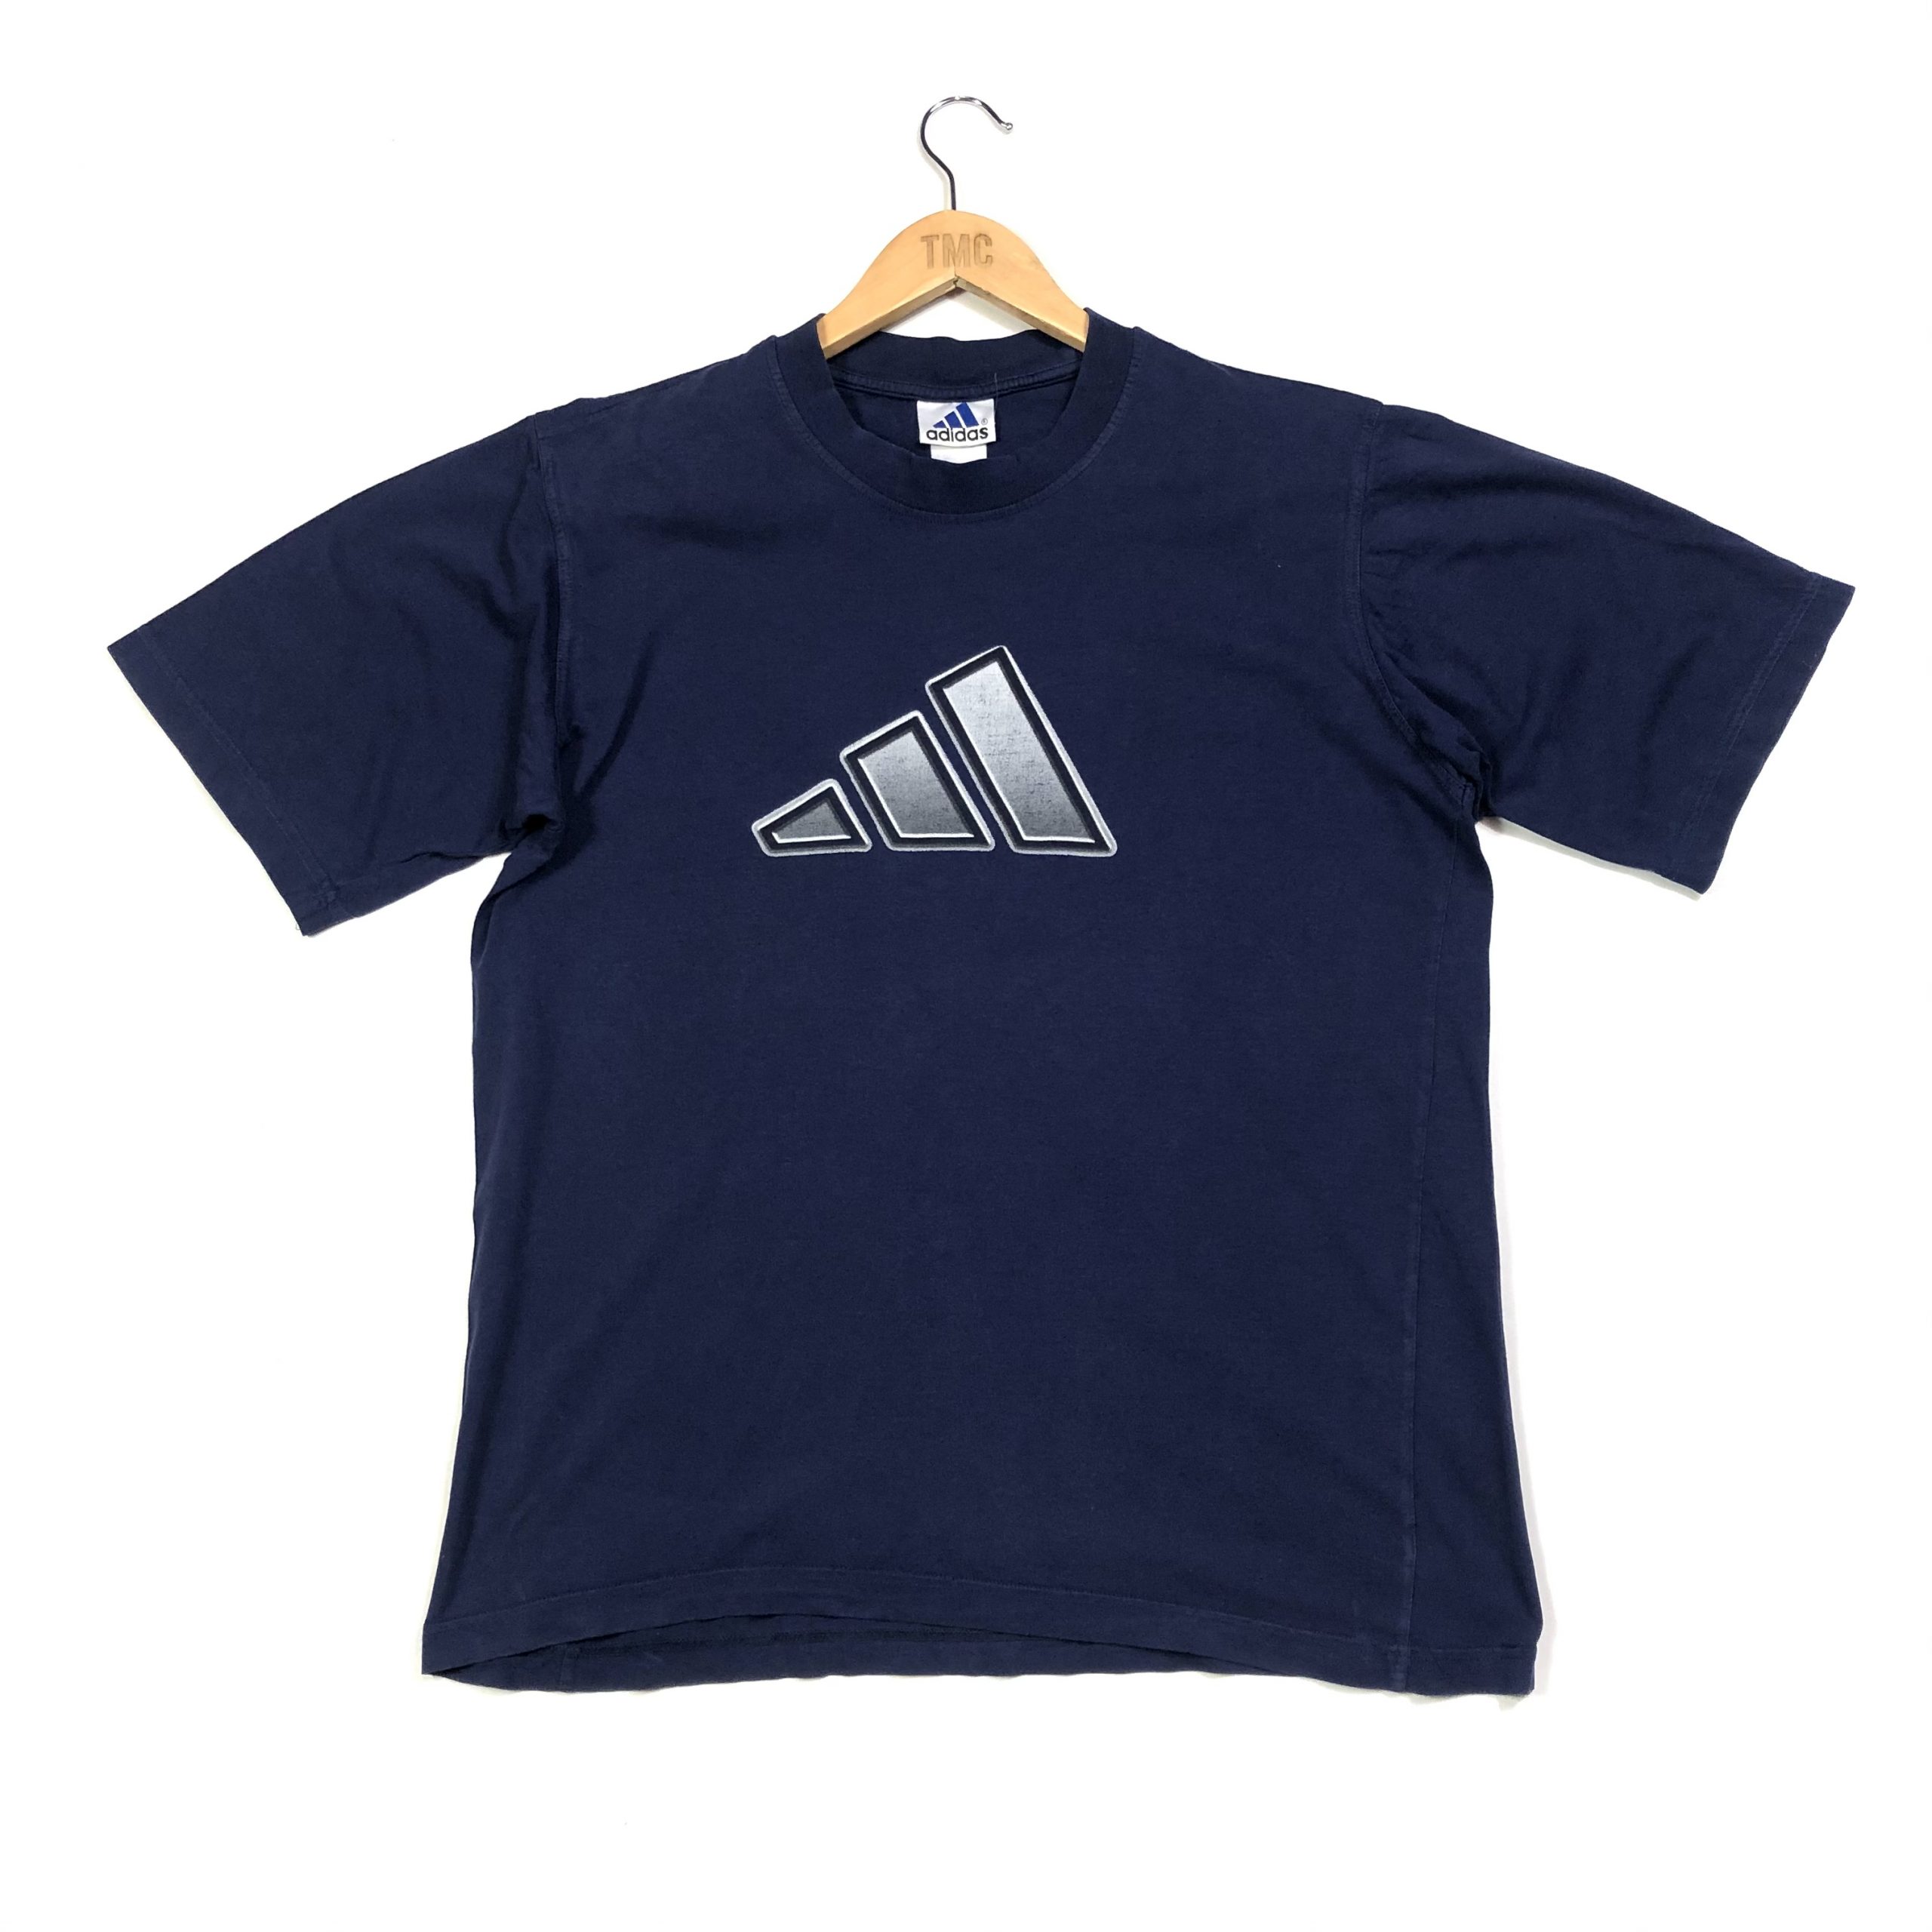 Adidas Big Logo T-Shirt - Navy - M - TMC Vintage - Vintage Clothing